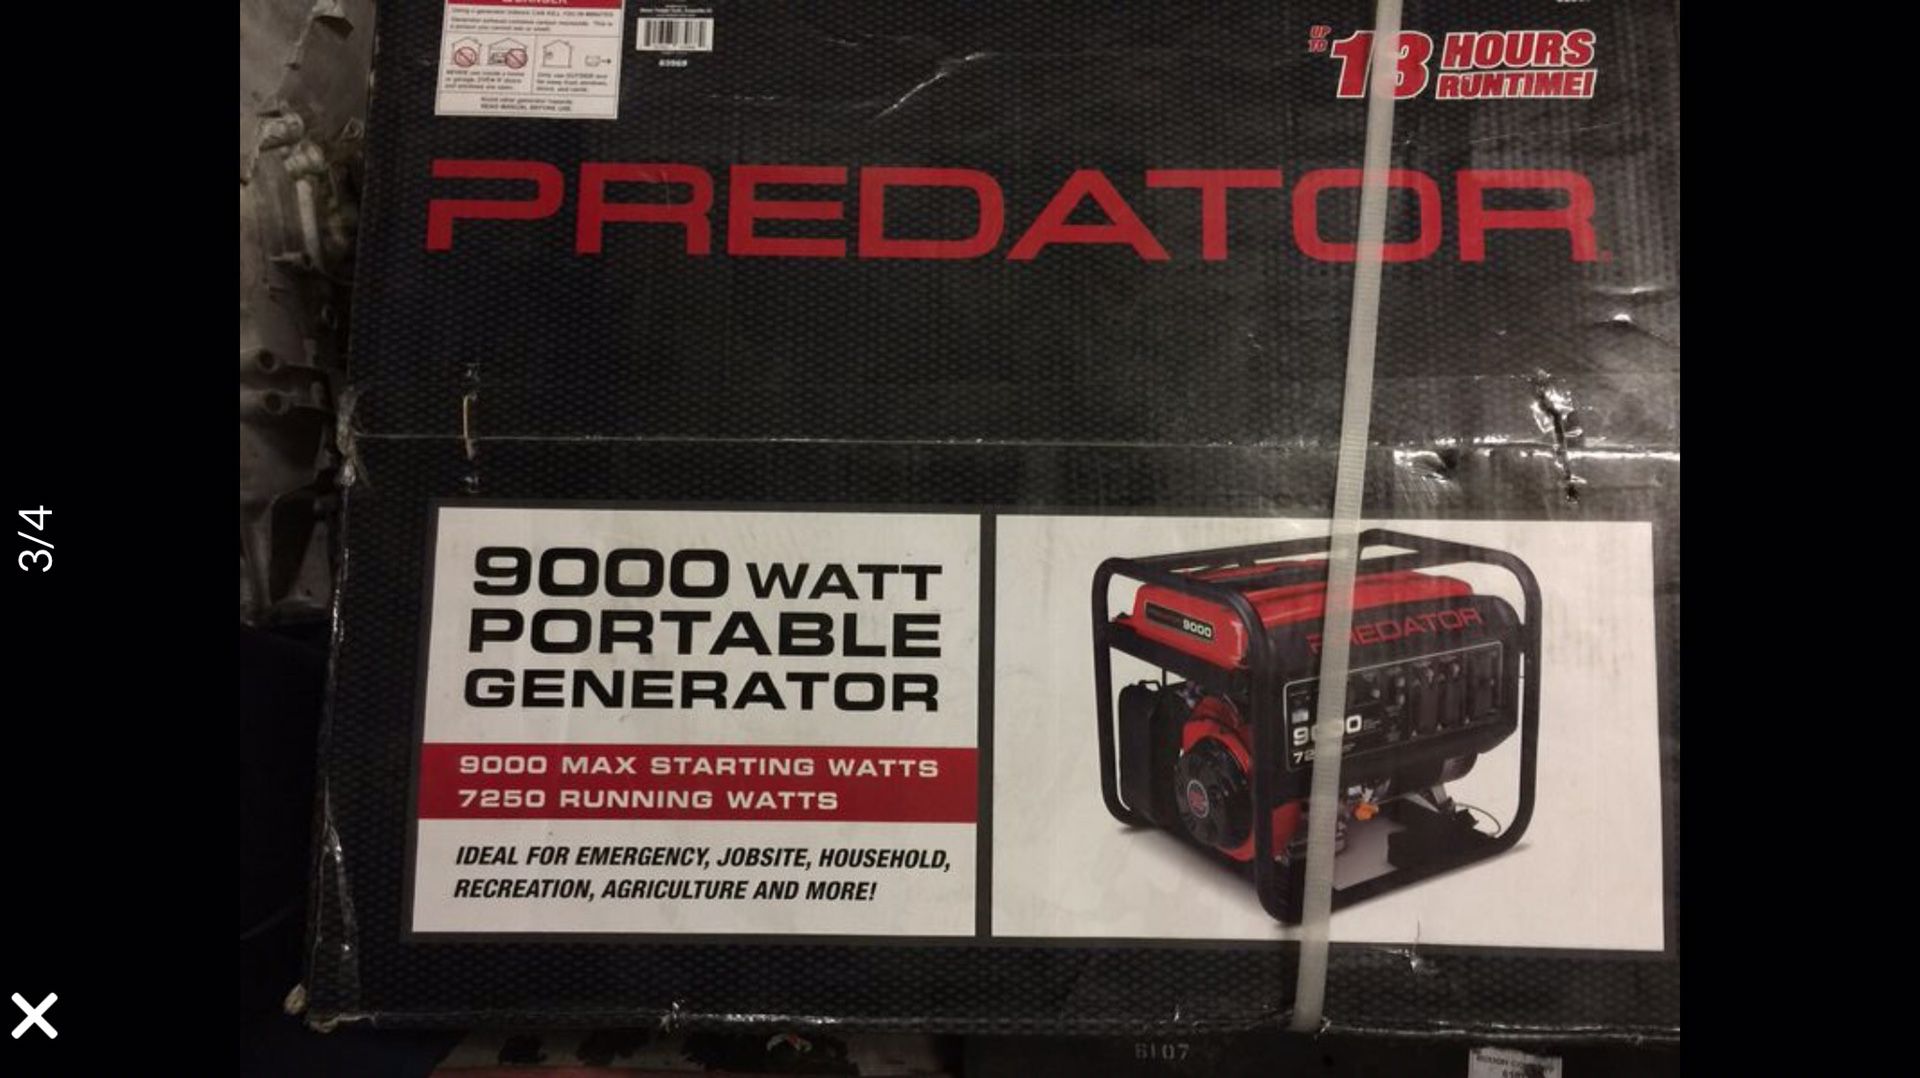 $ 550 Brand New 9000 Watts Predator Generator Brand New in Box Great Deal